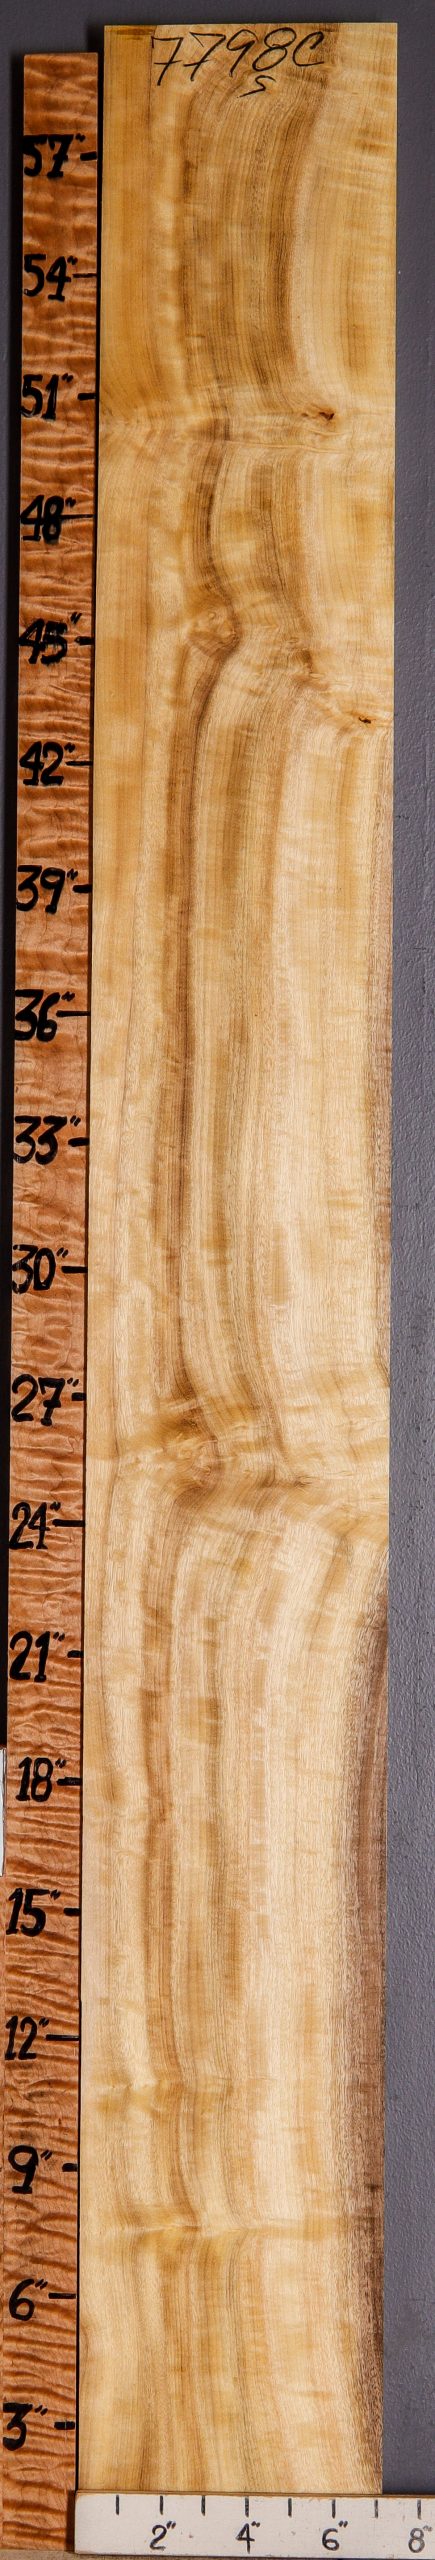 5A Striped Myrtlewood Lumber 7" X 60" X 4/4 (NWT-7798C)